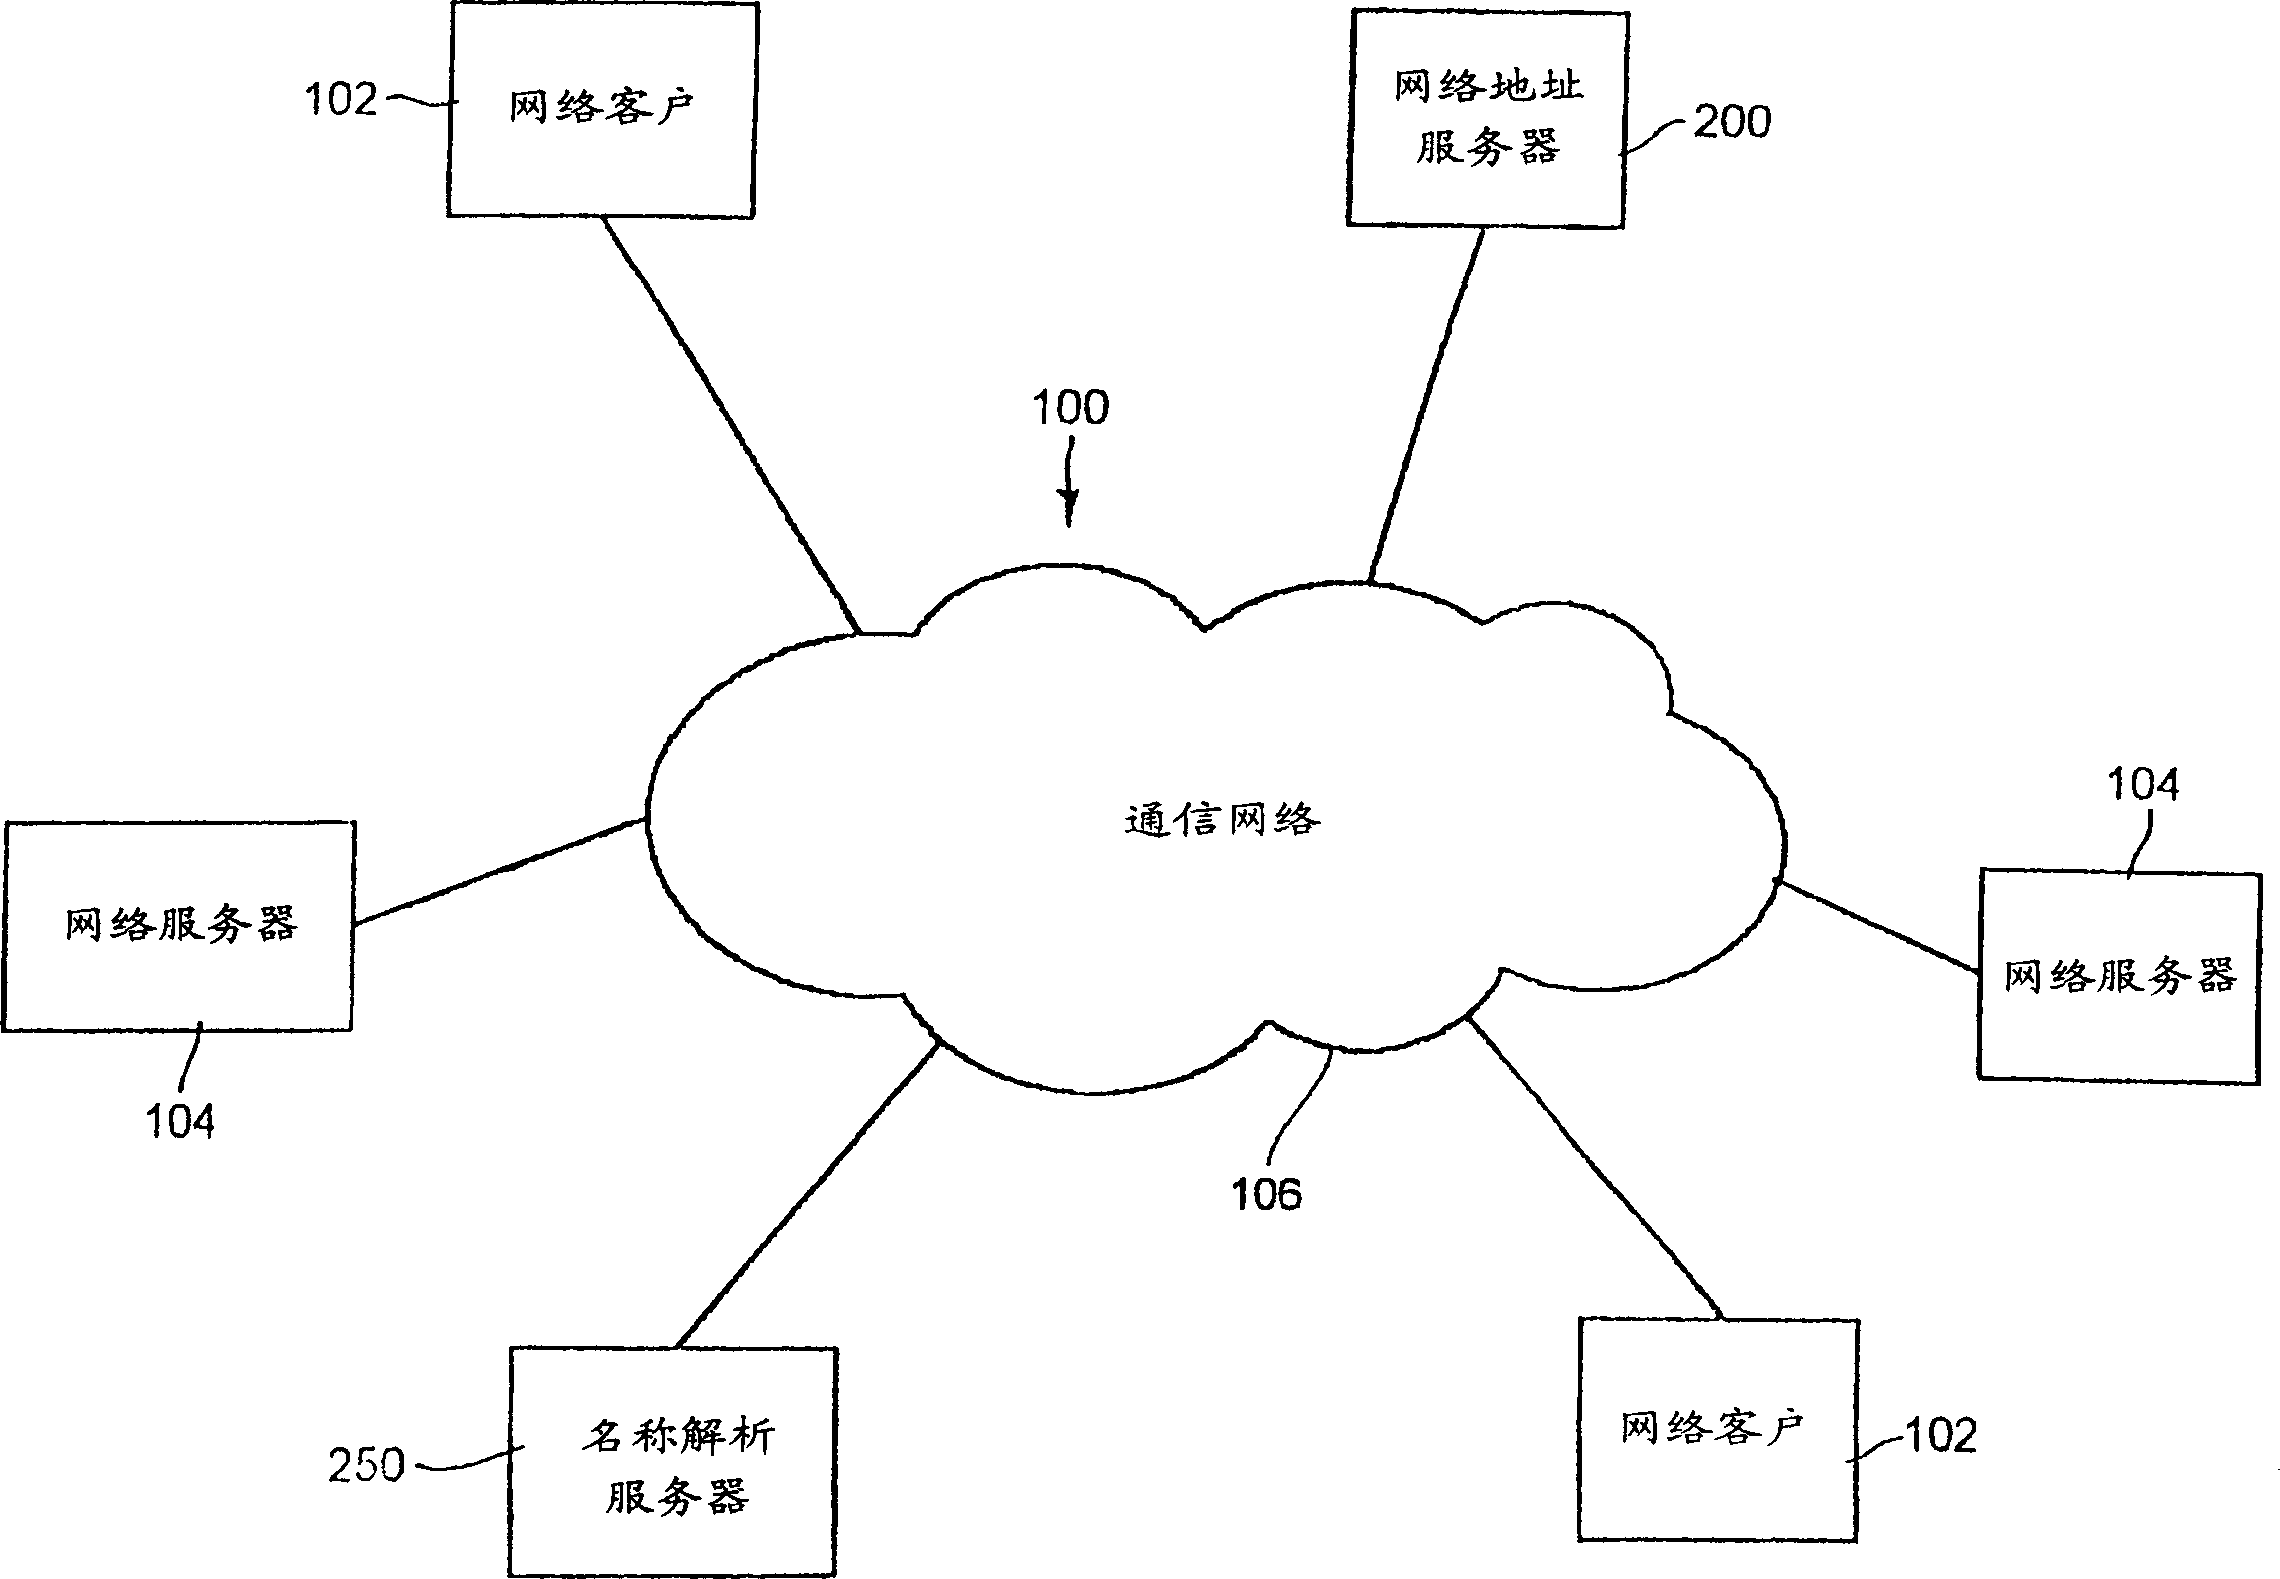 Network address server